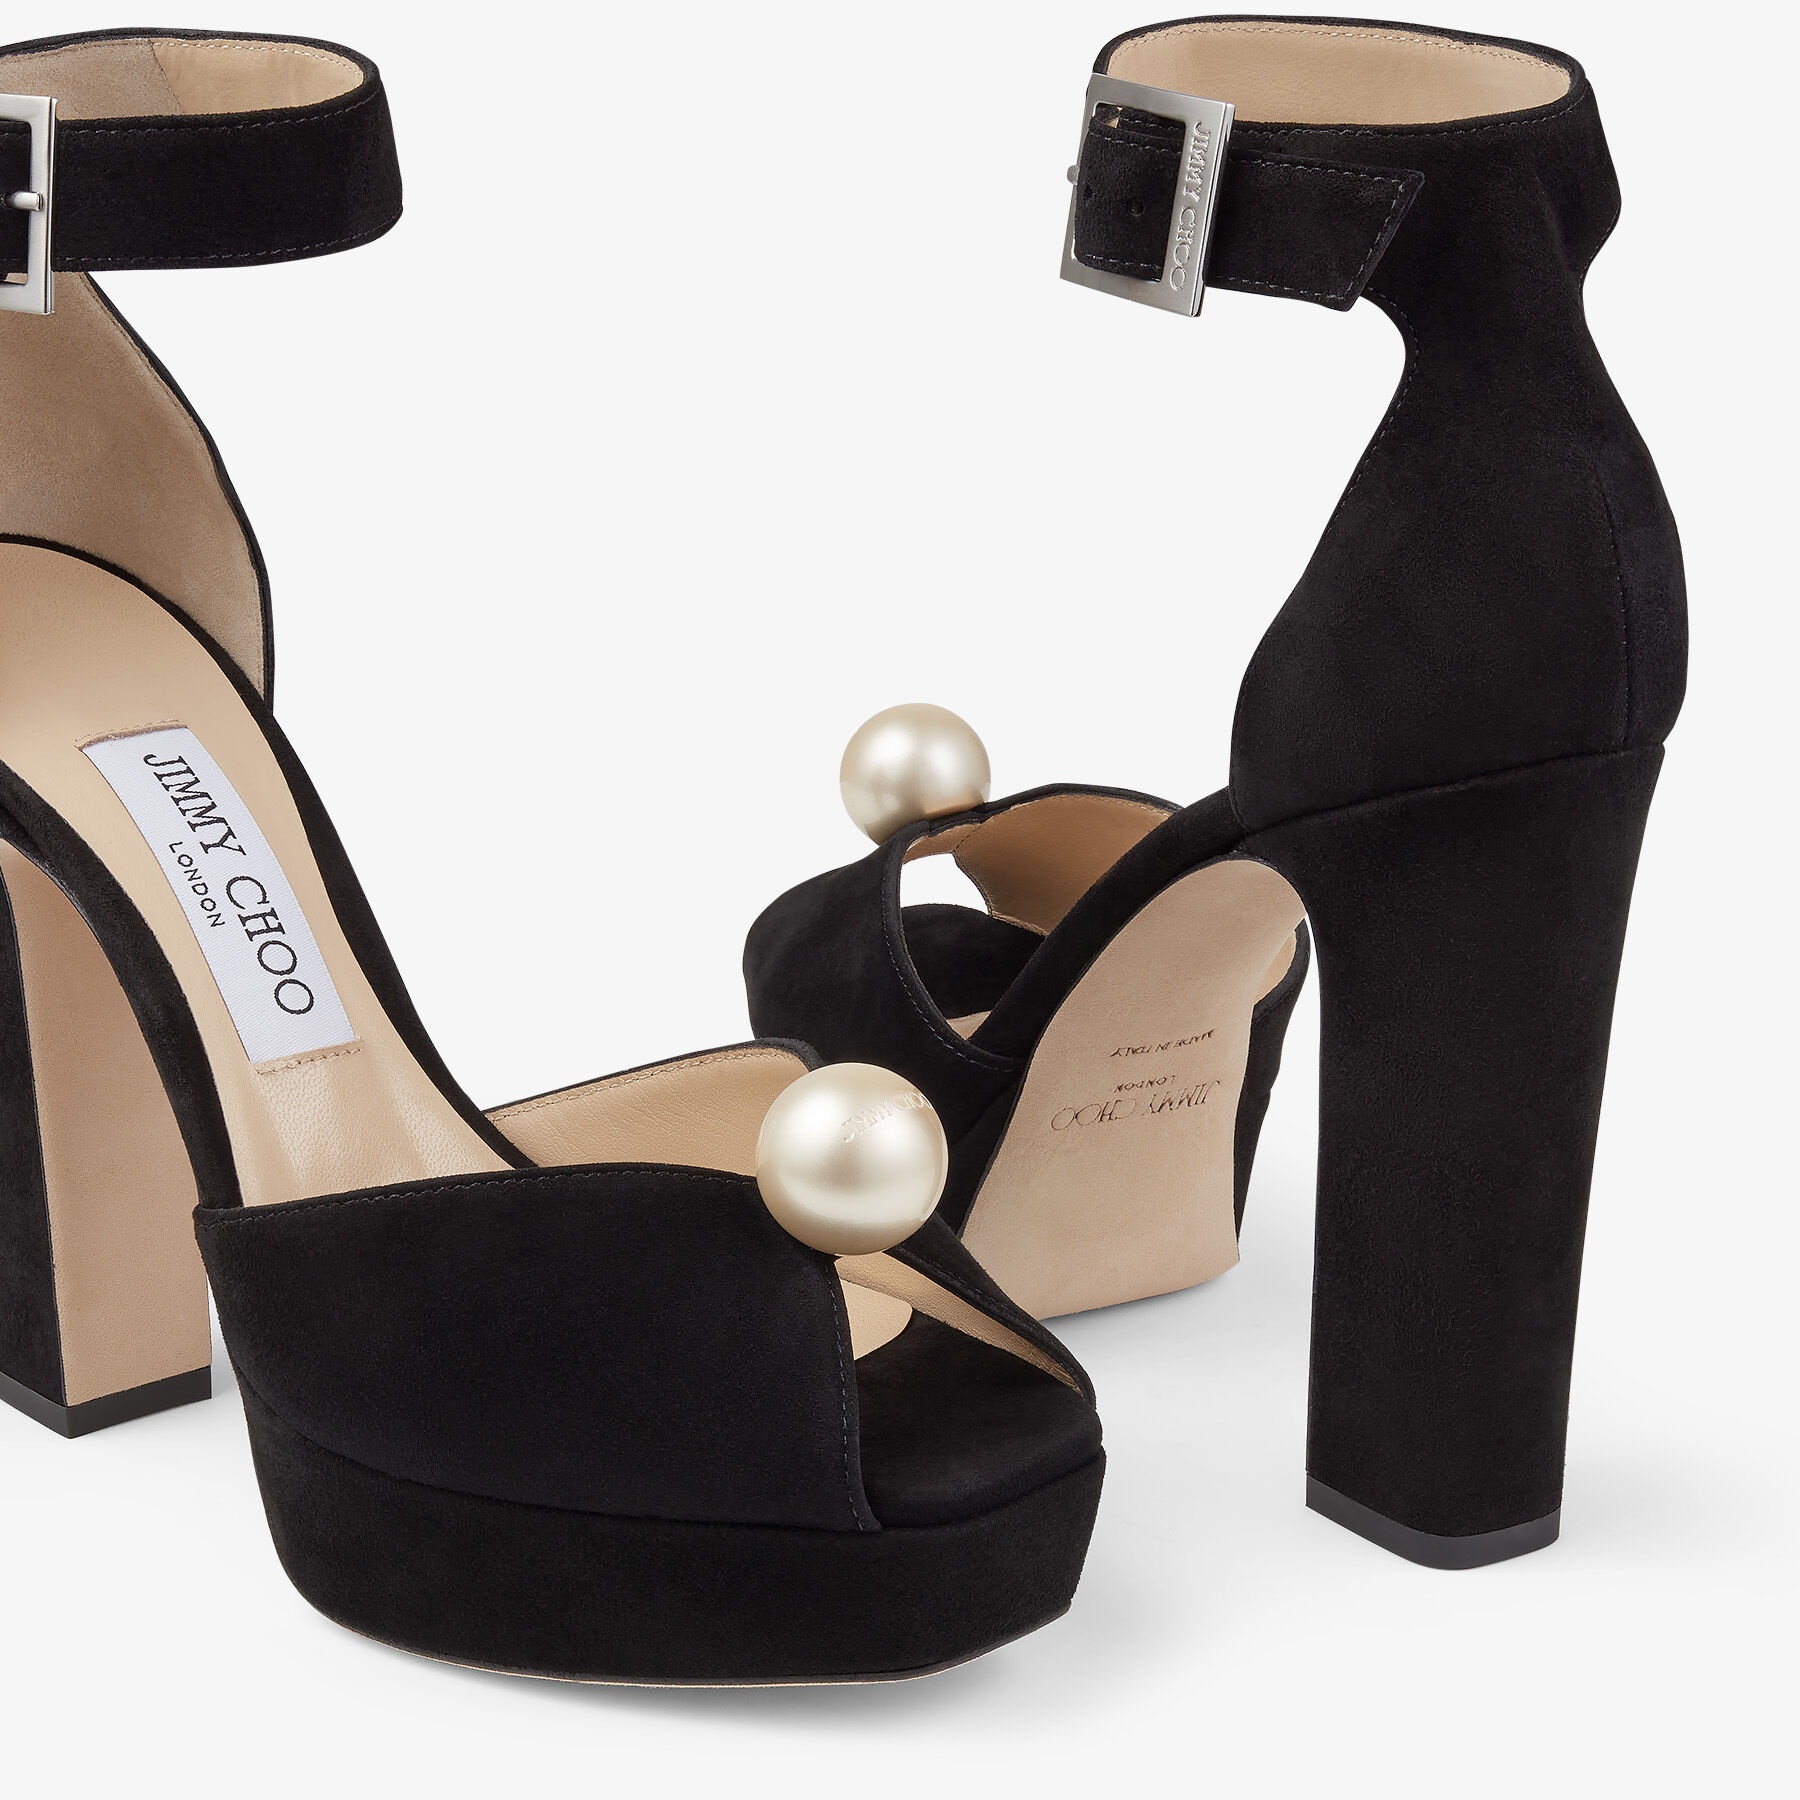 Socorie 120
Black Suede Platform Sandals with Pearl Detailing - 4